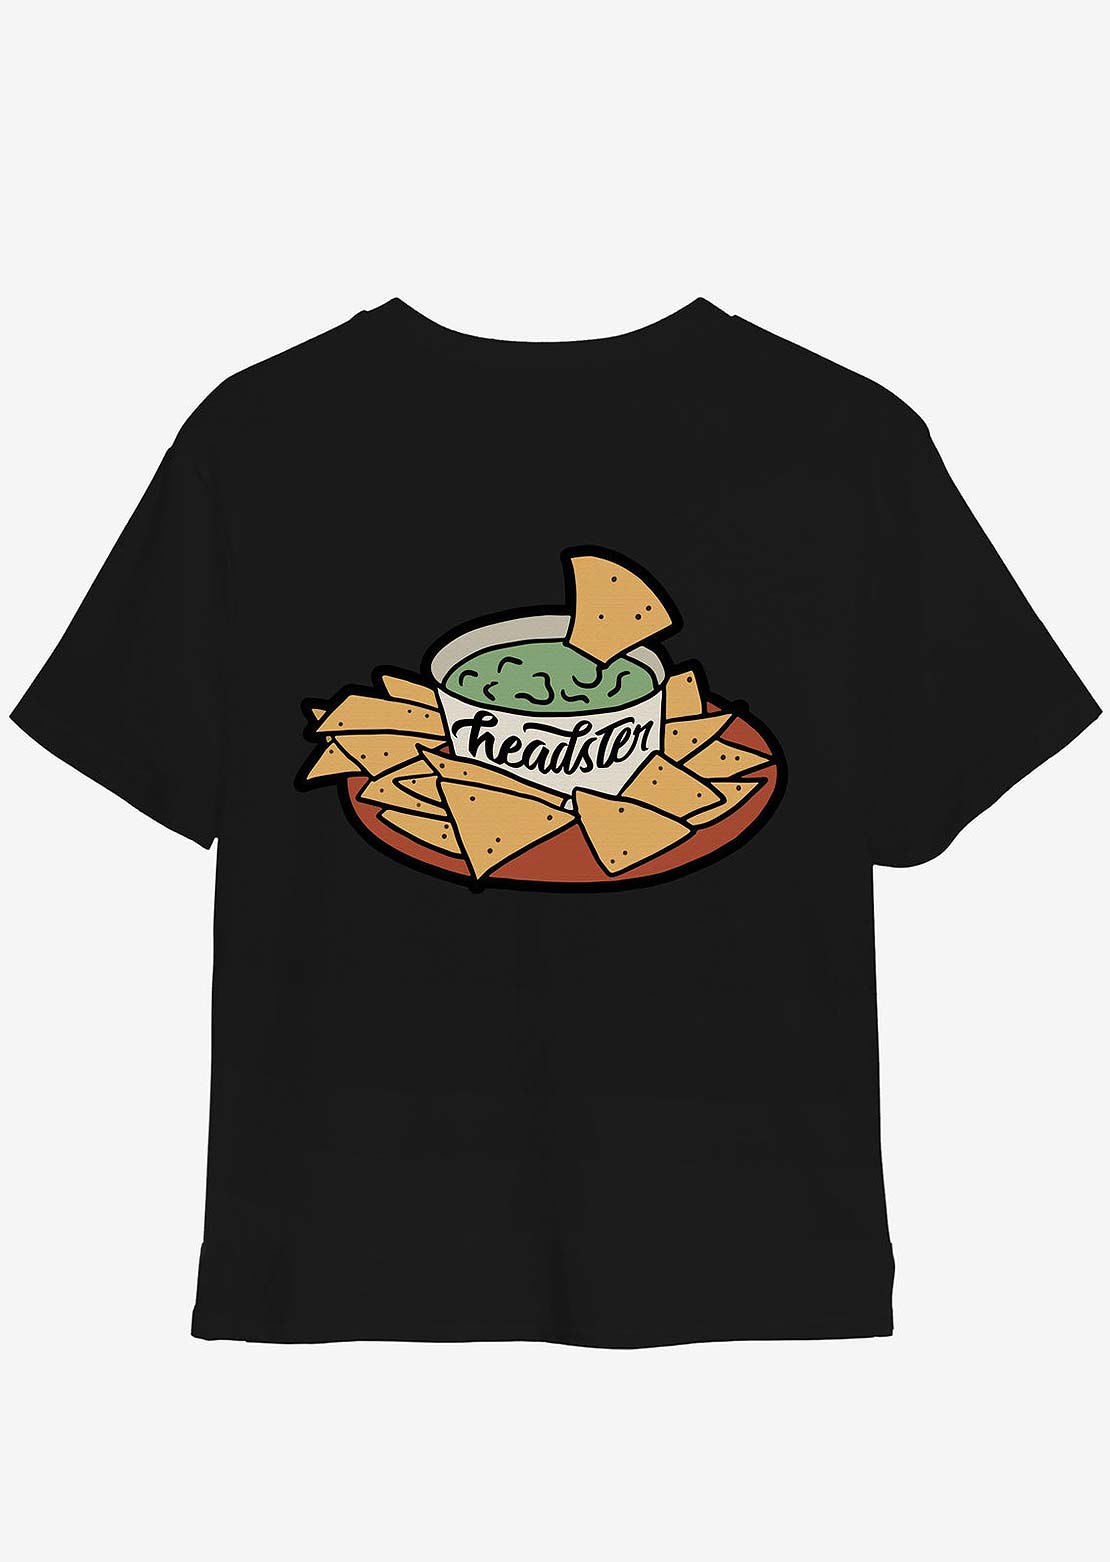 Headster Junior Taco Tuesday T-Shirt Black